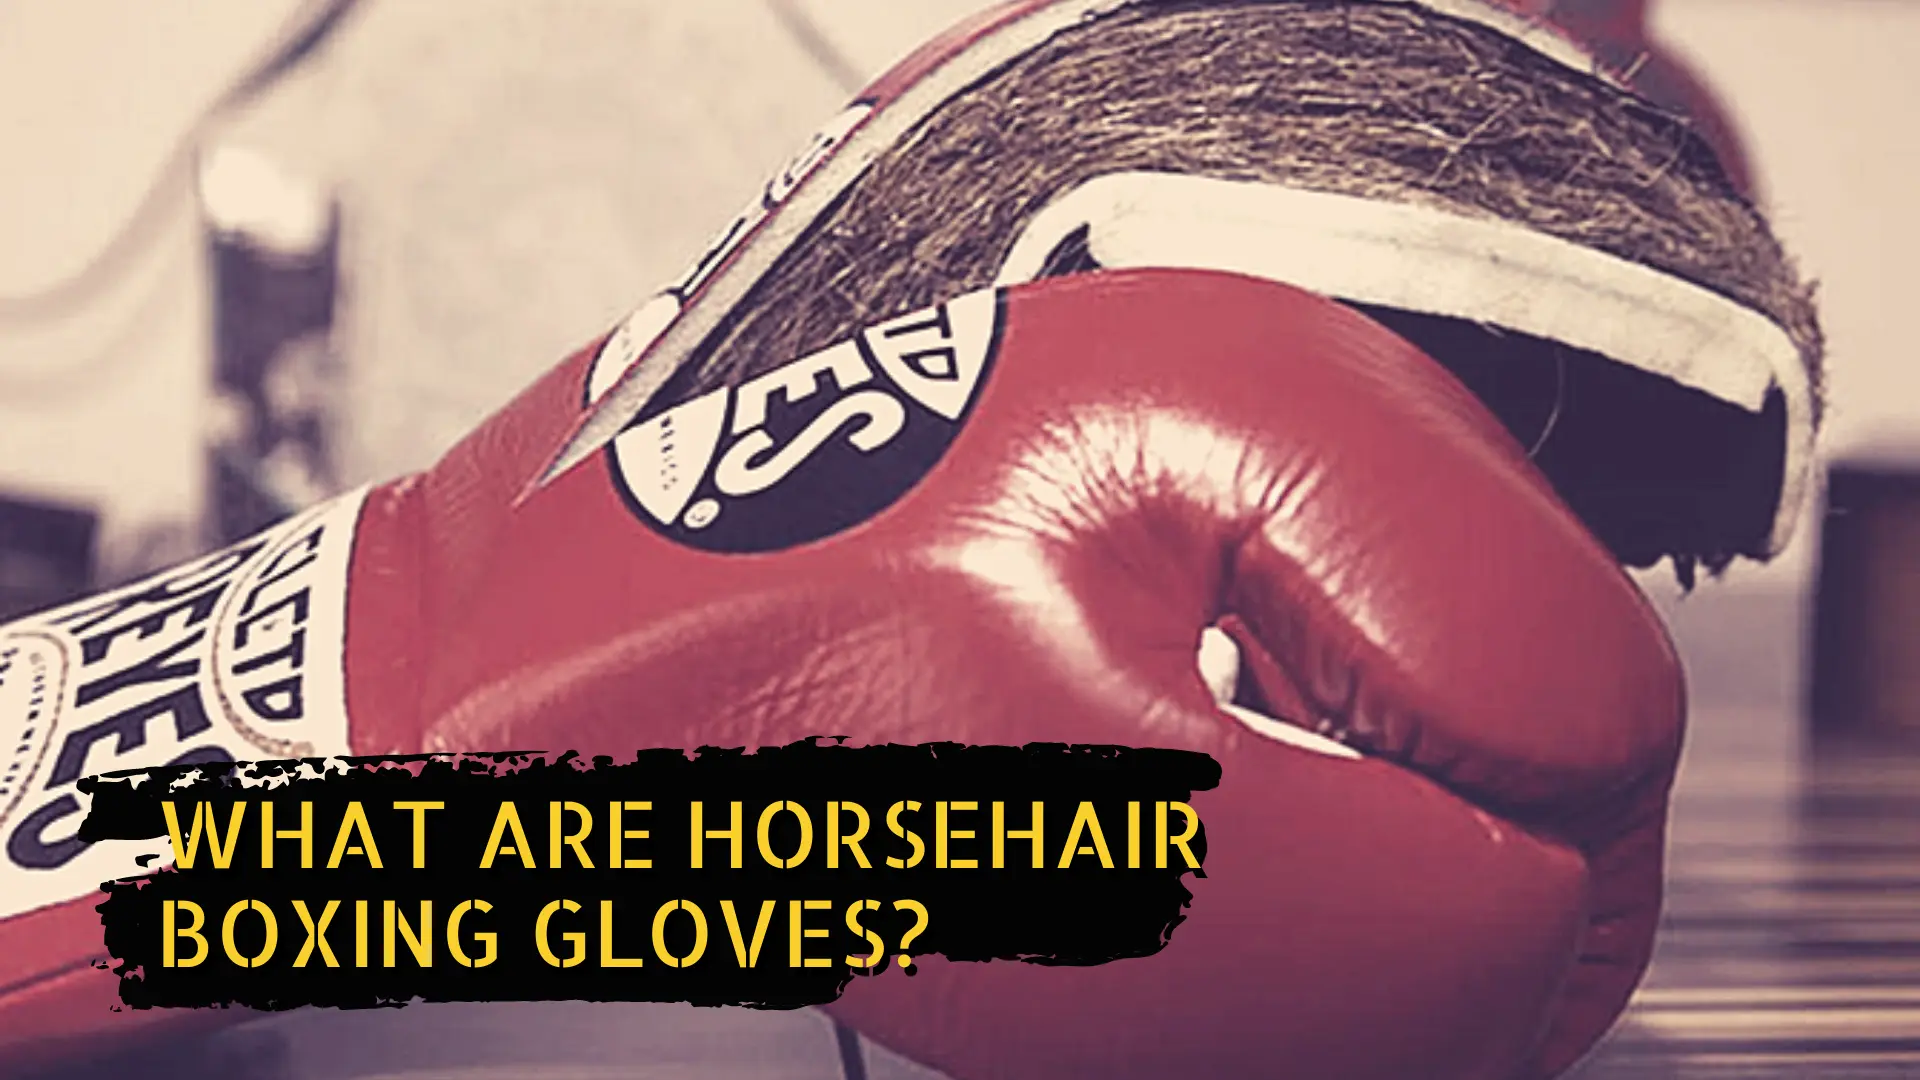 horsehair boxing gloves cut open